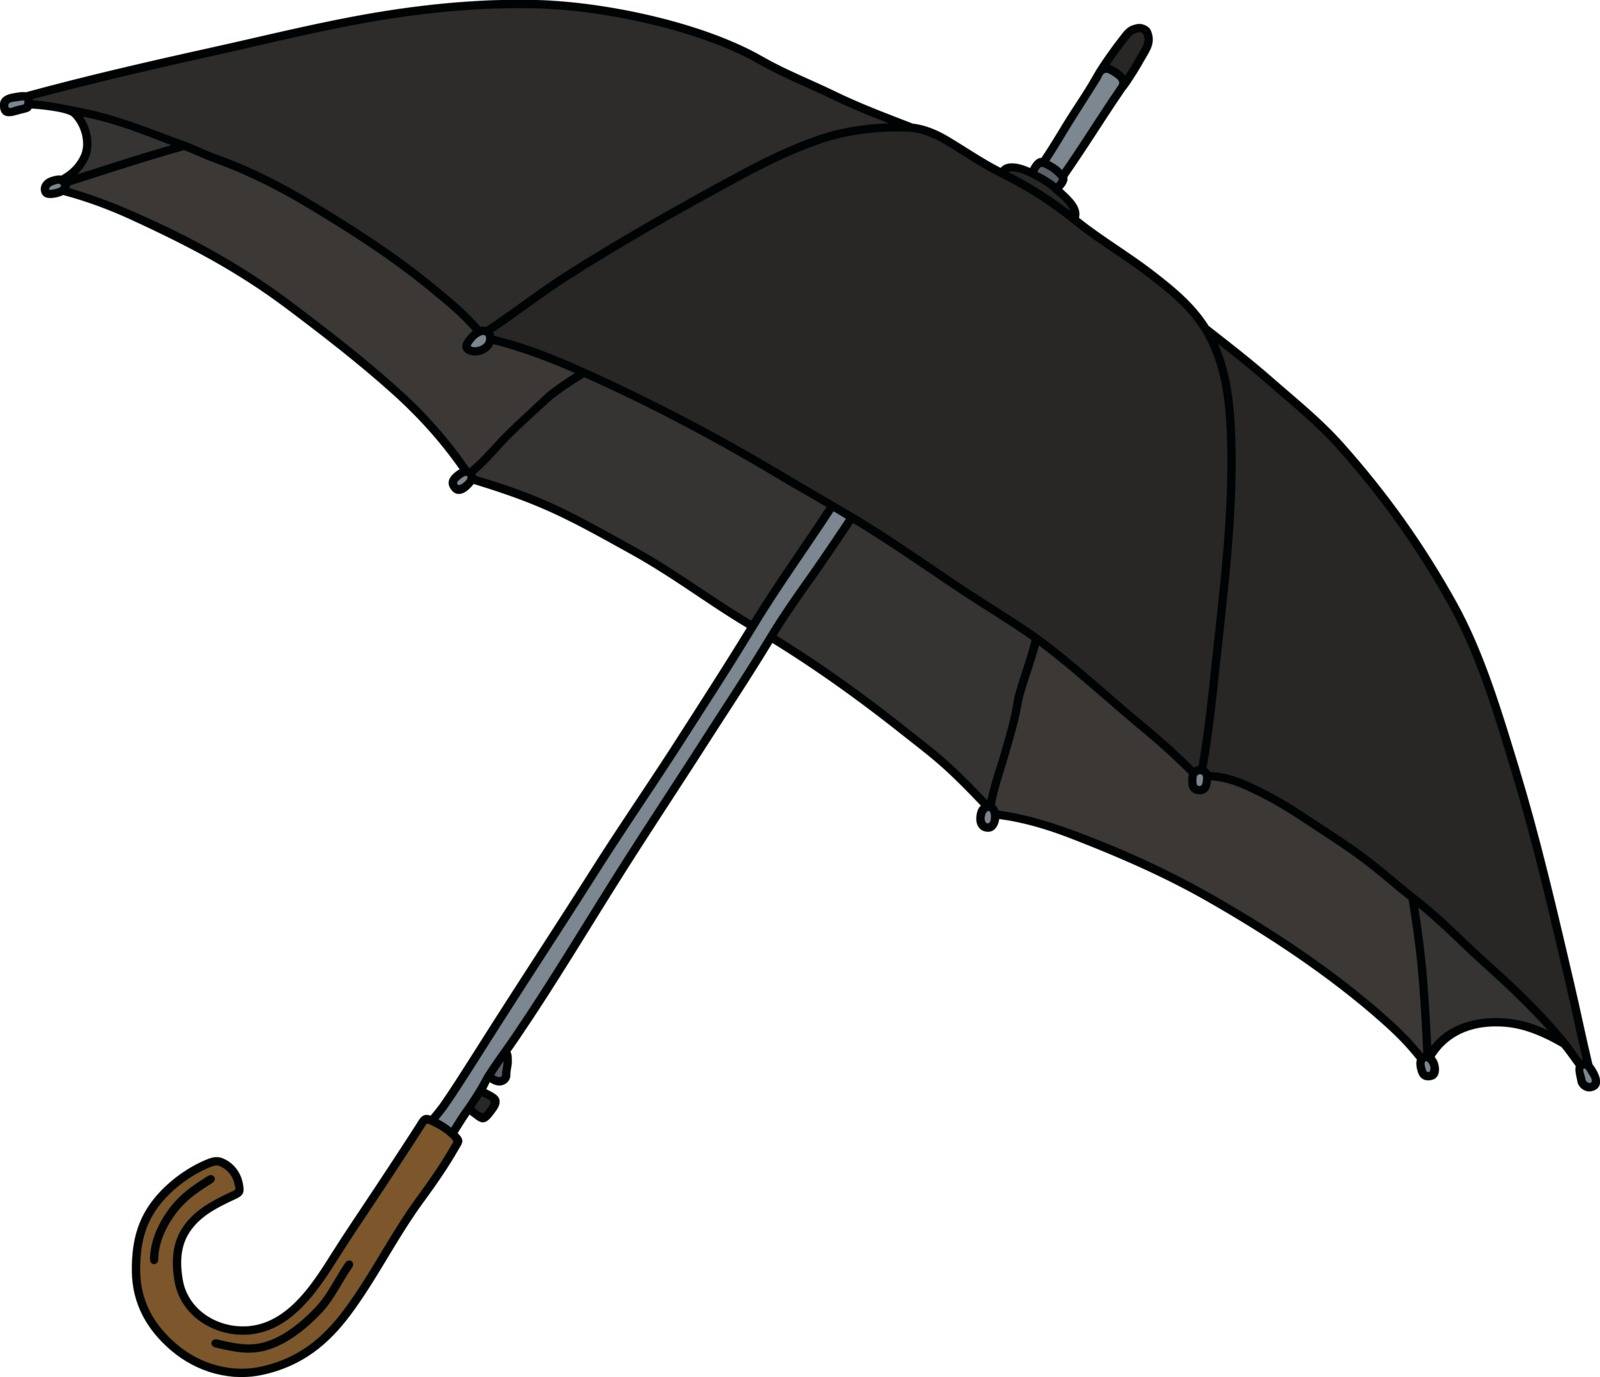 The classic black umbrella by vostal